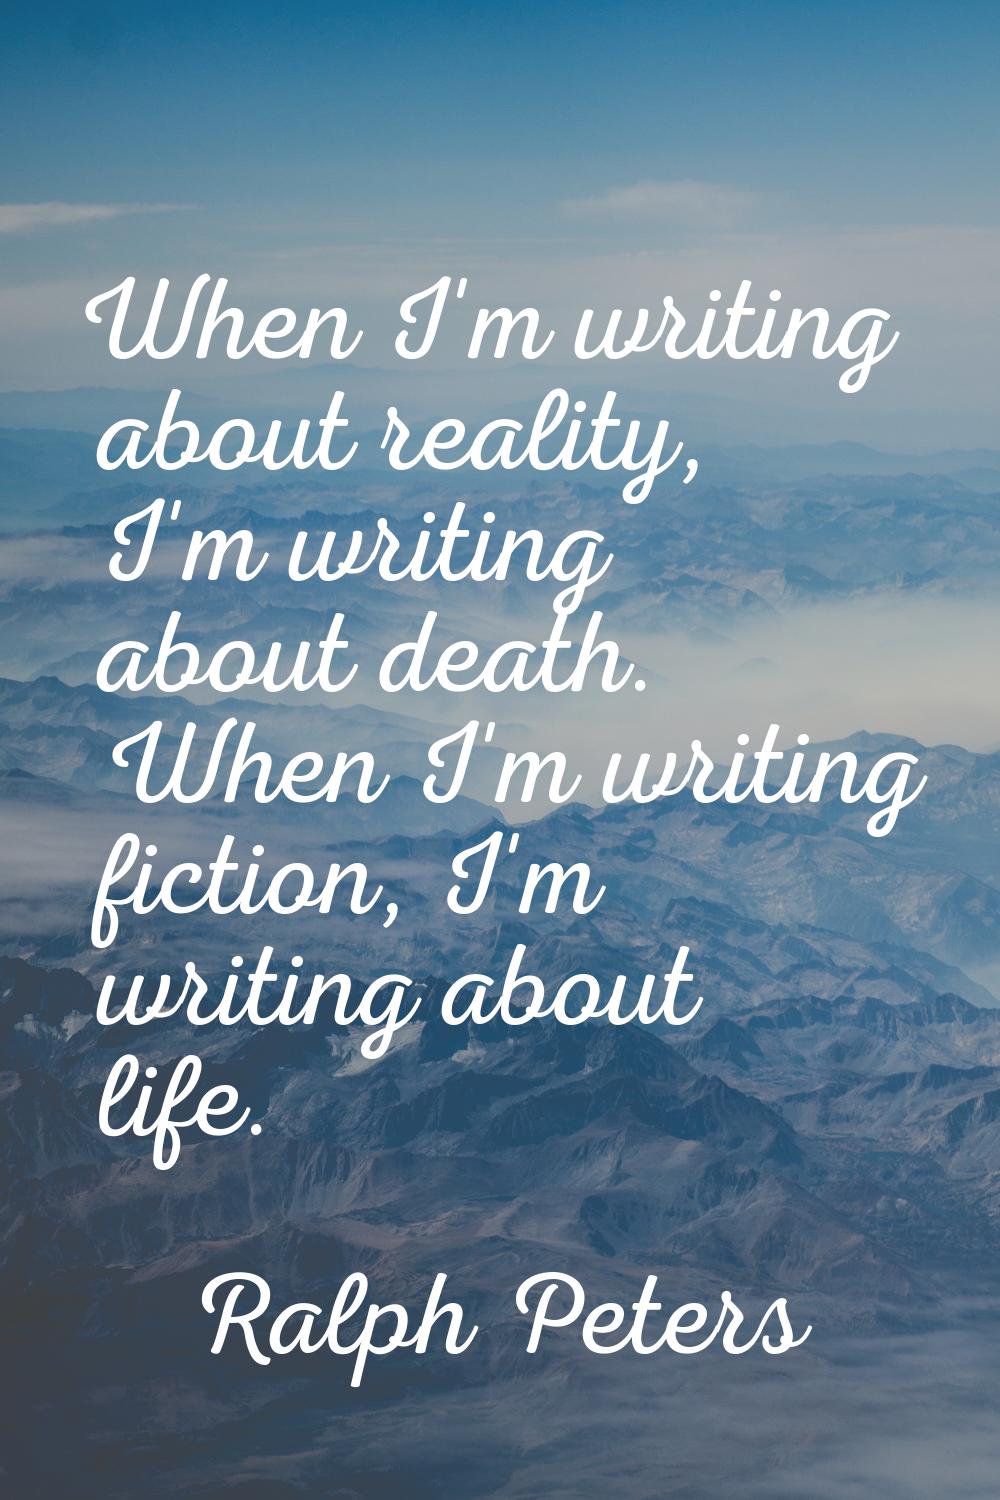 When I'm writing about reality, I'm writing about death. When I'm writing fiction, I'm writing abou